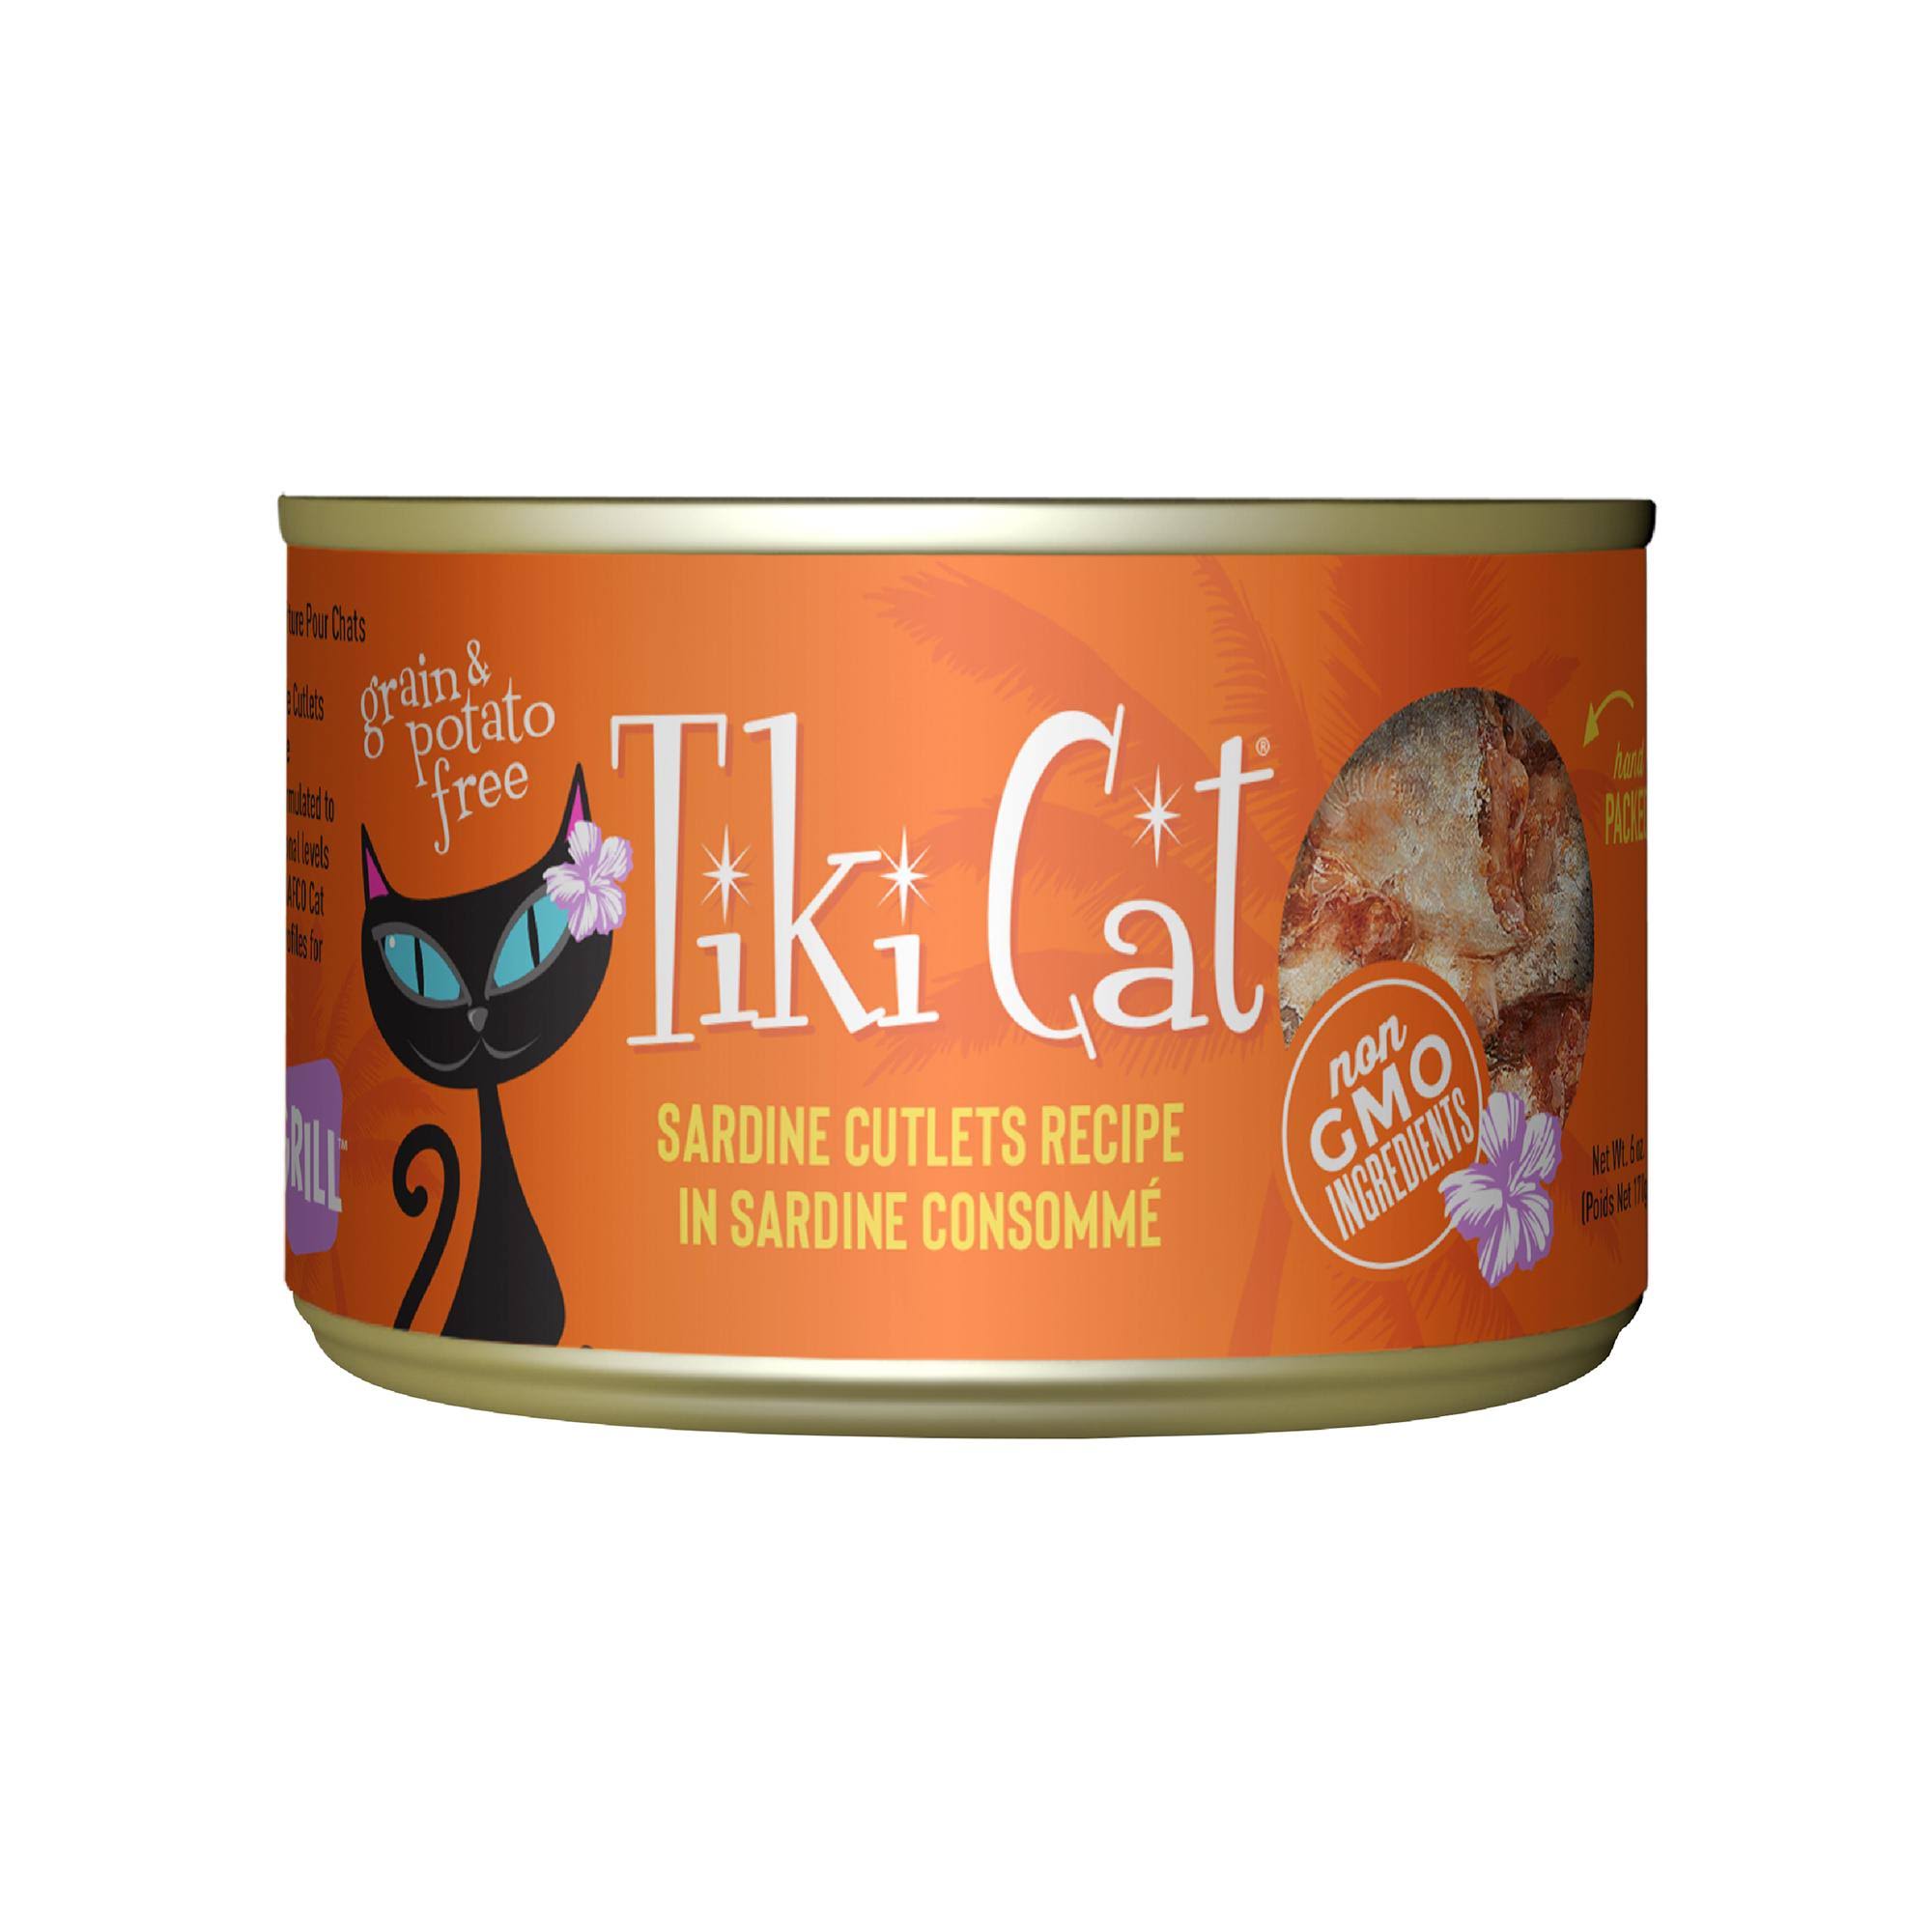 Tiki Cat Grill Sardine Cutlets Recipe in Sardine Consomme, 6-oz